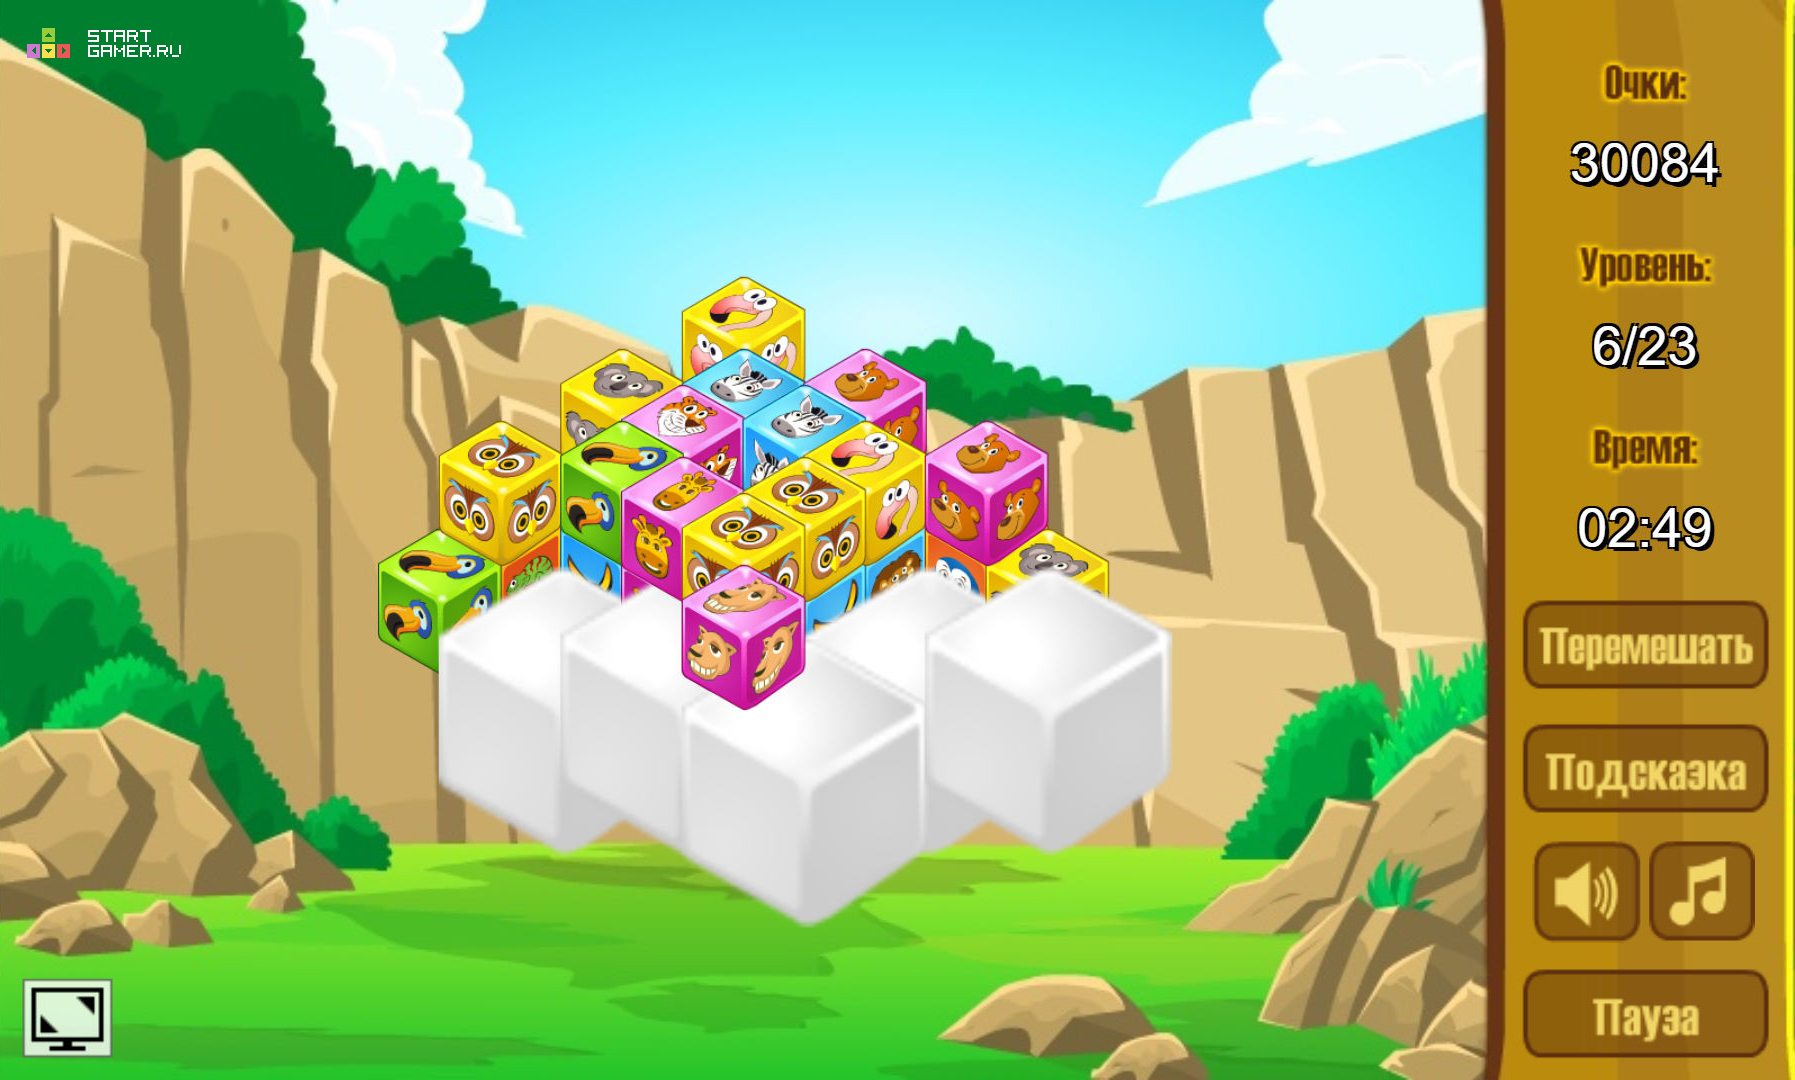 Игра кубики вниз. Игра кубики. Игры кубики и квадратики. Игра Cubes кубики. Игра про кубики с лицами.